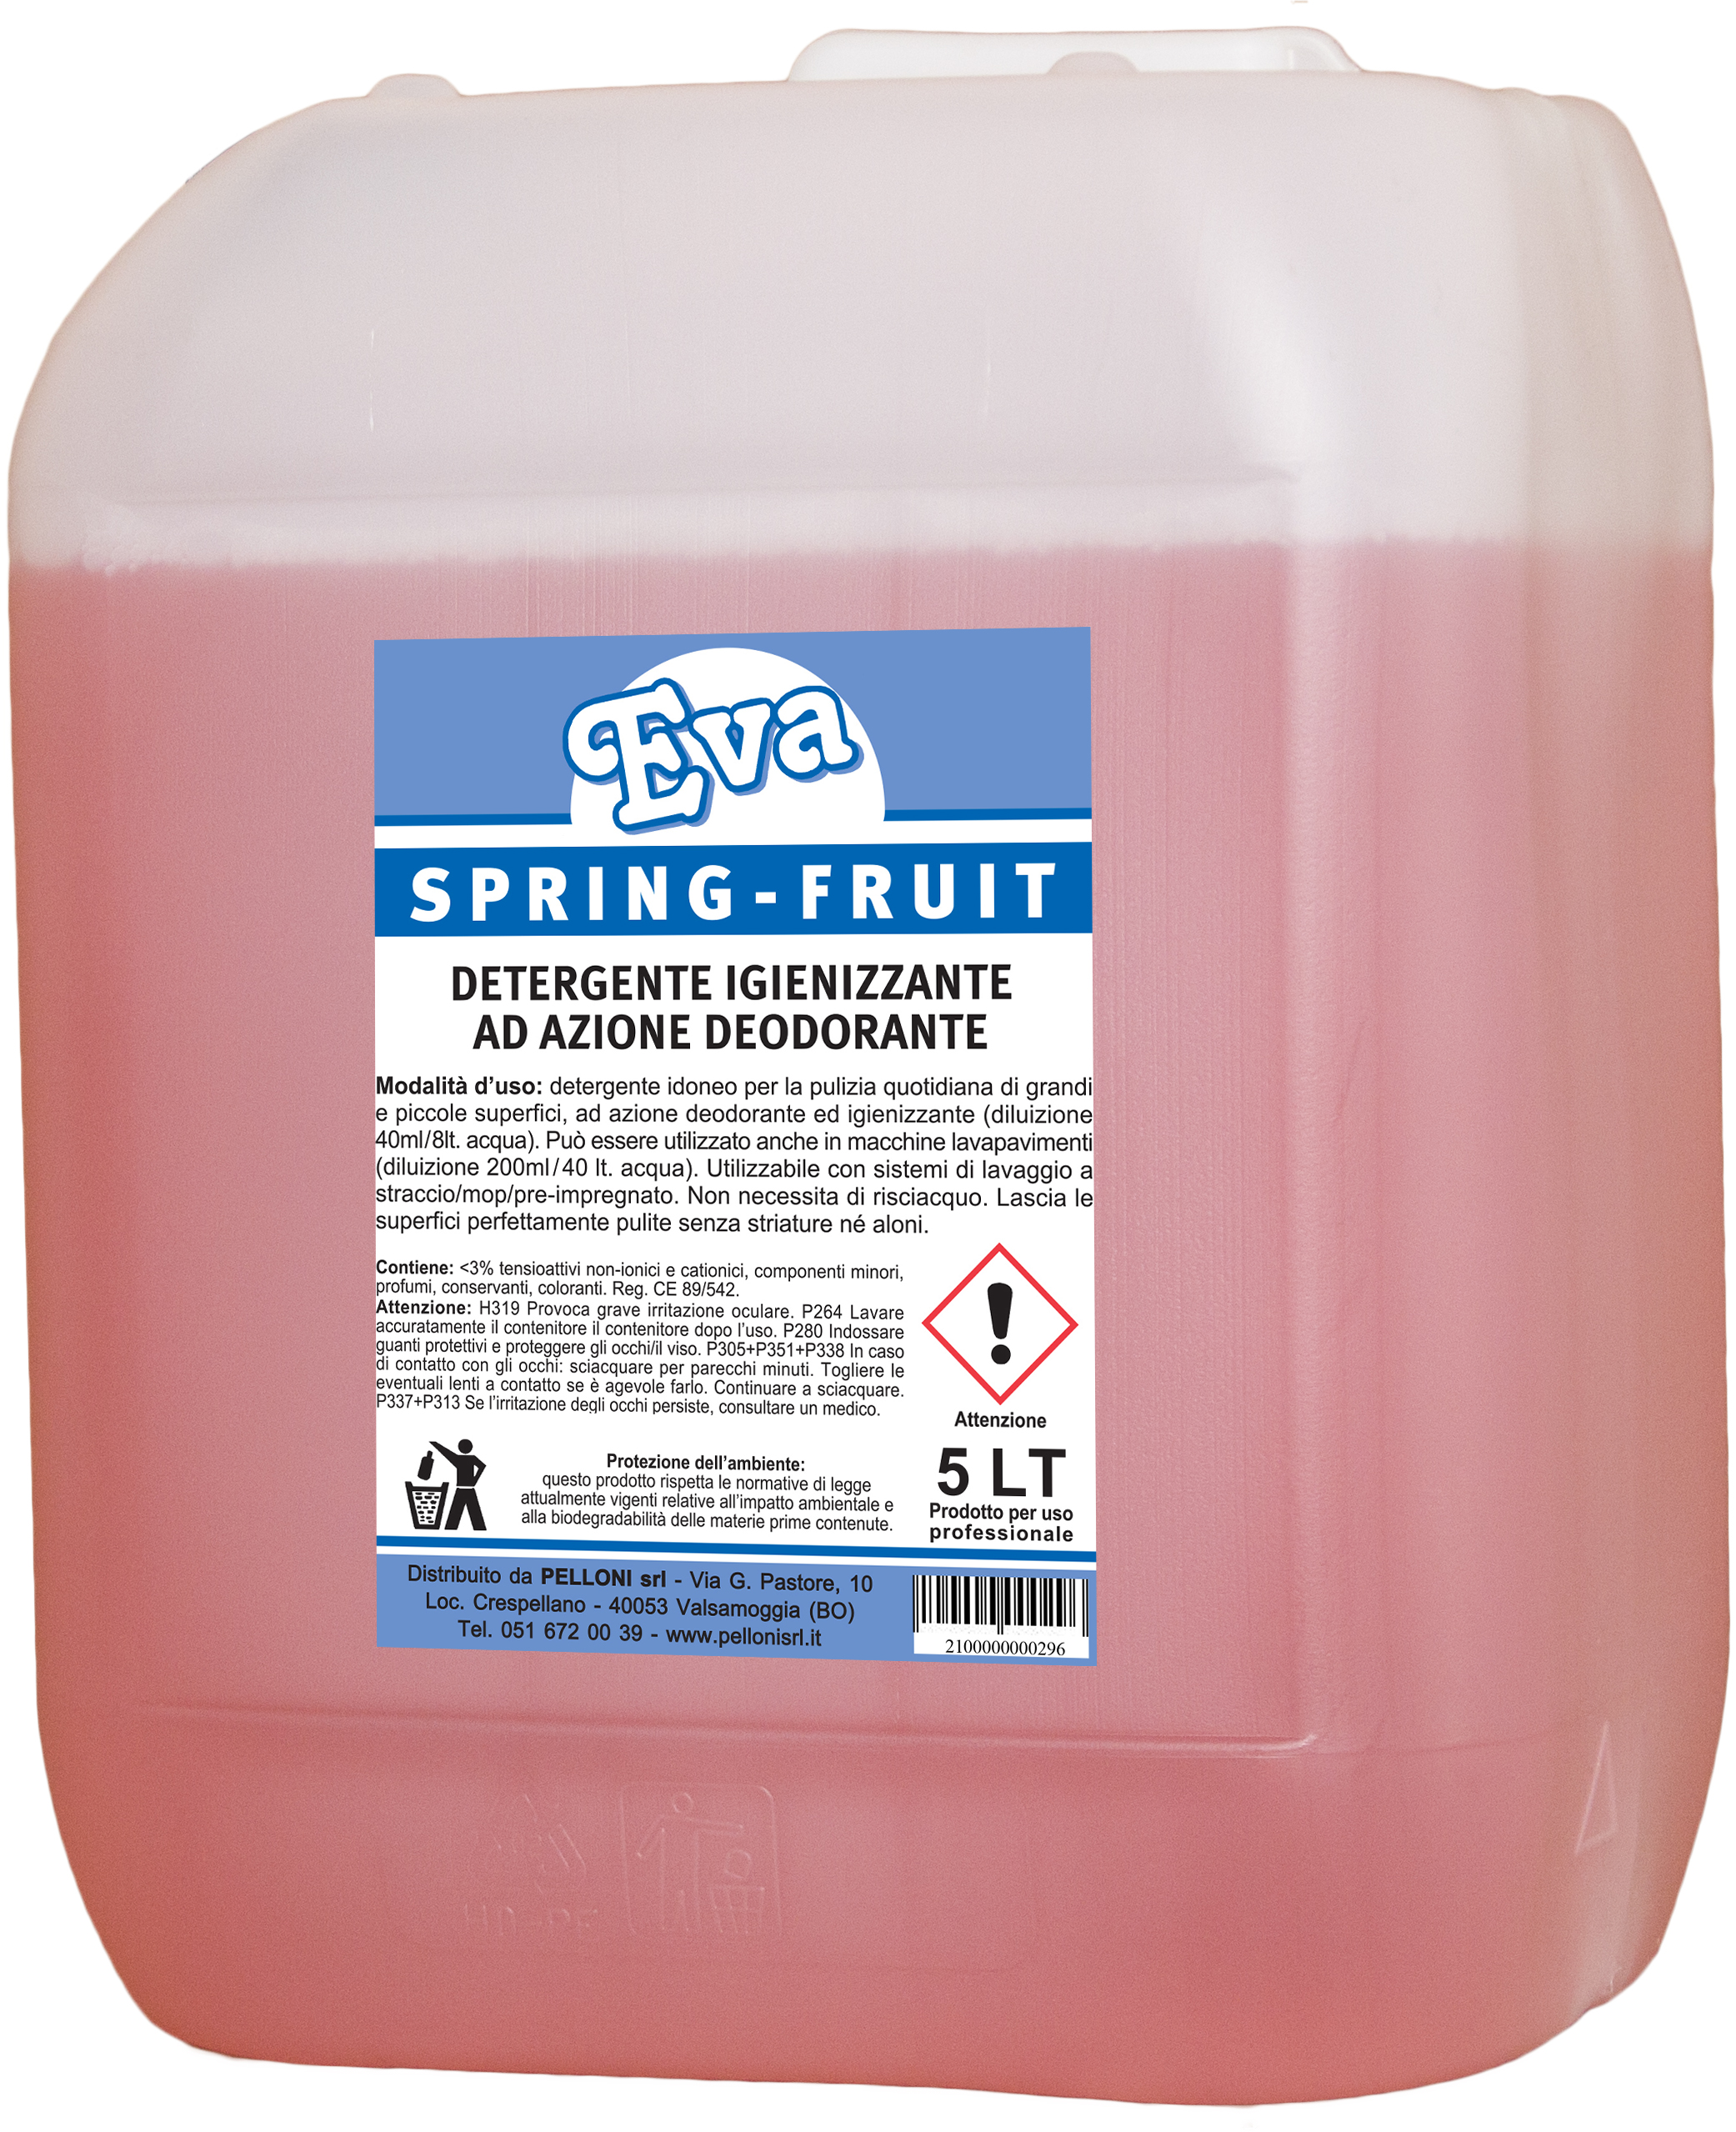 Spring Fruit detergente igienizzante profumato 5Kg